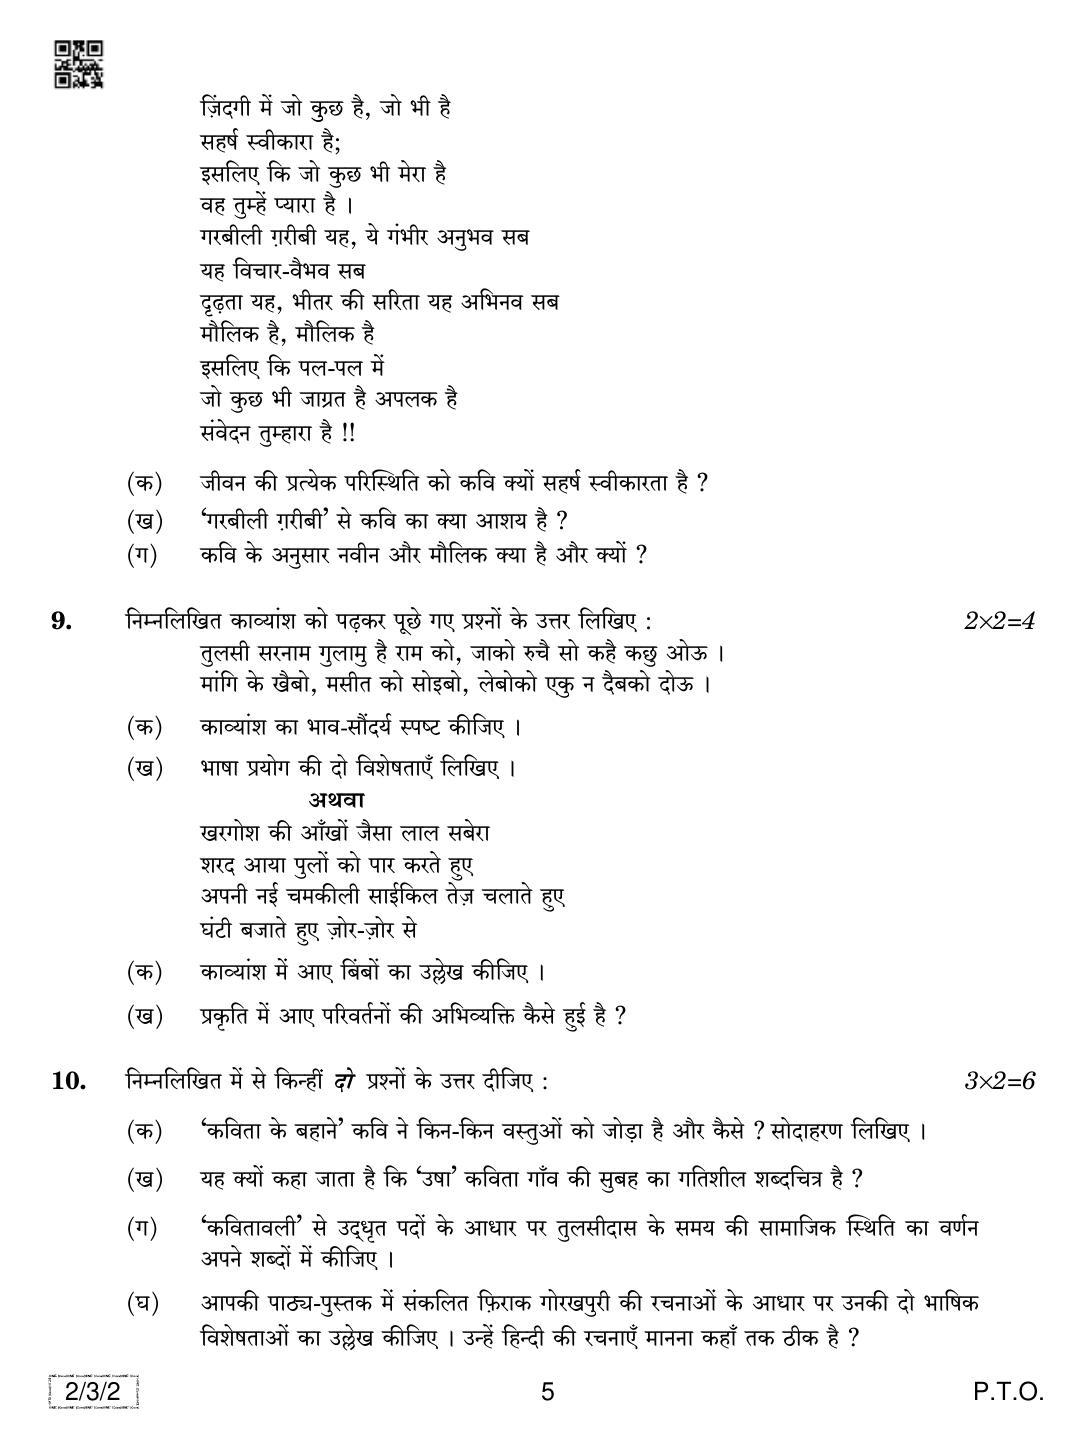 CBSE Class 12 2-3-2 Hindi Core 2019 Question Paper - Page 5